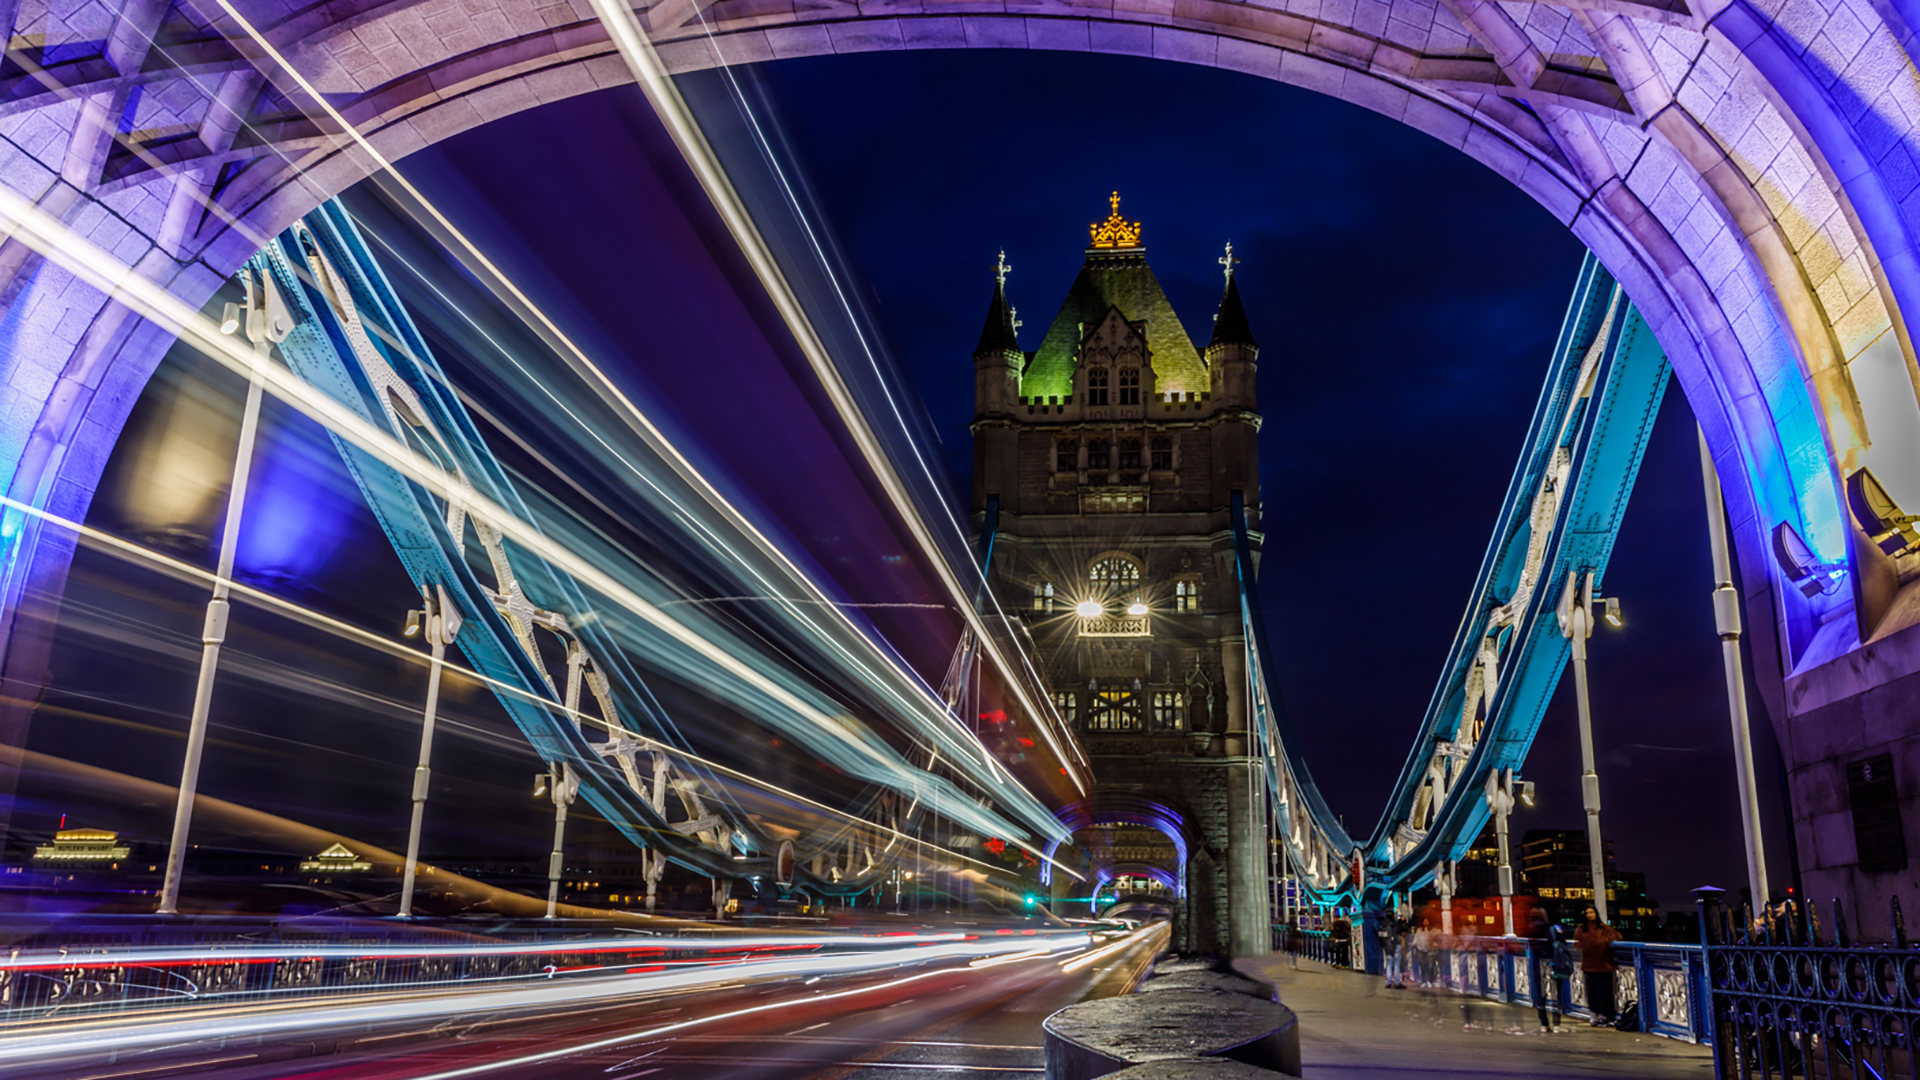 Nightime On Tower Bridge by Steve Bexon